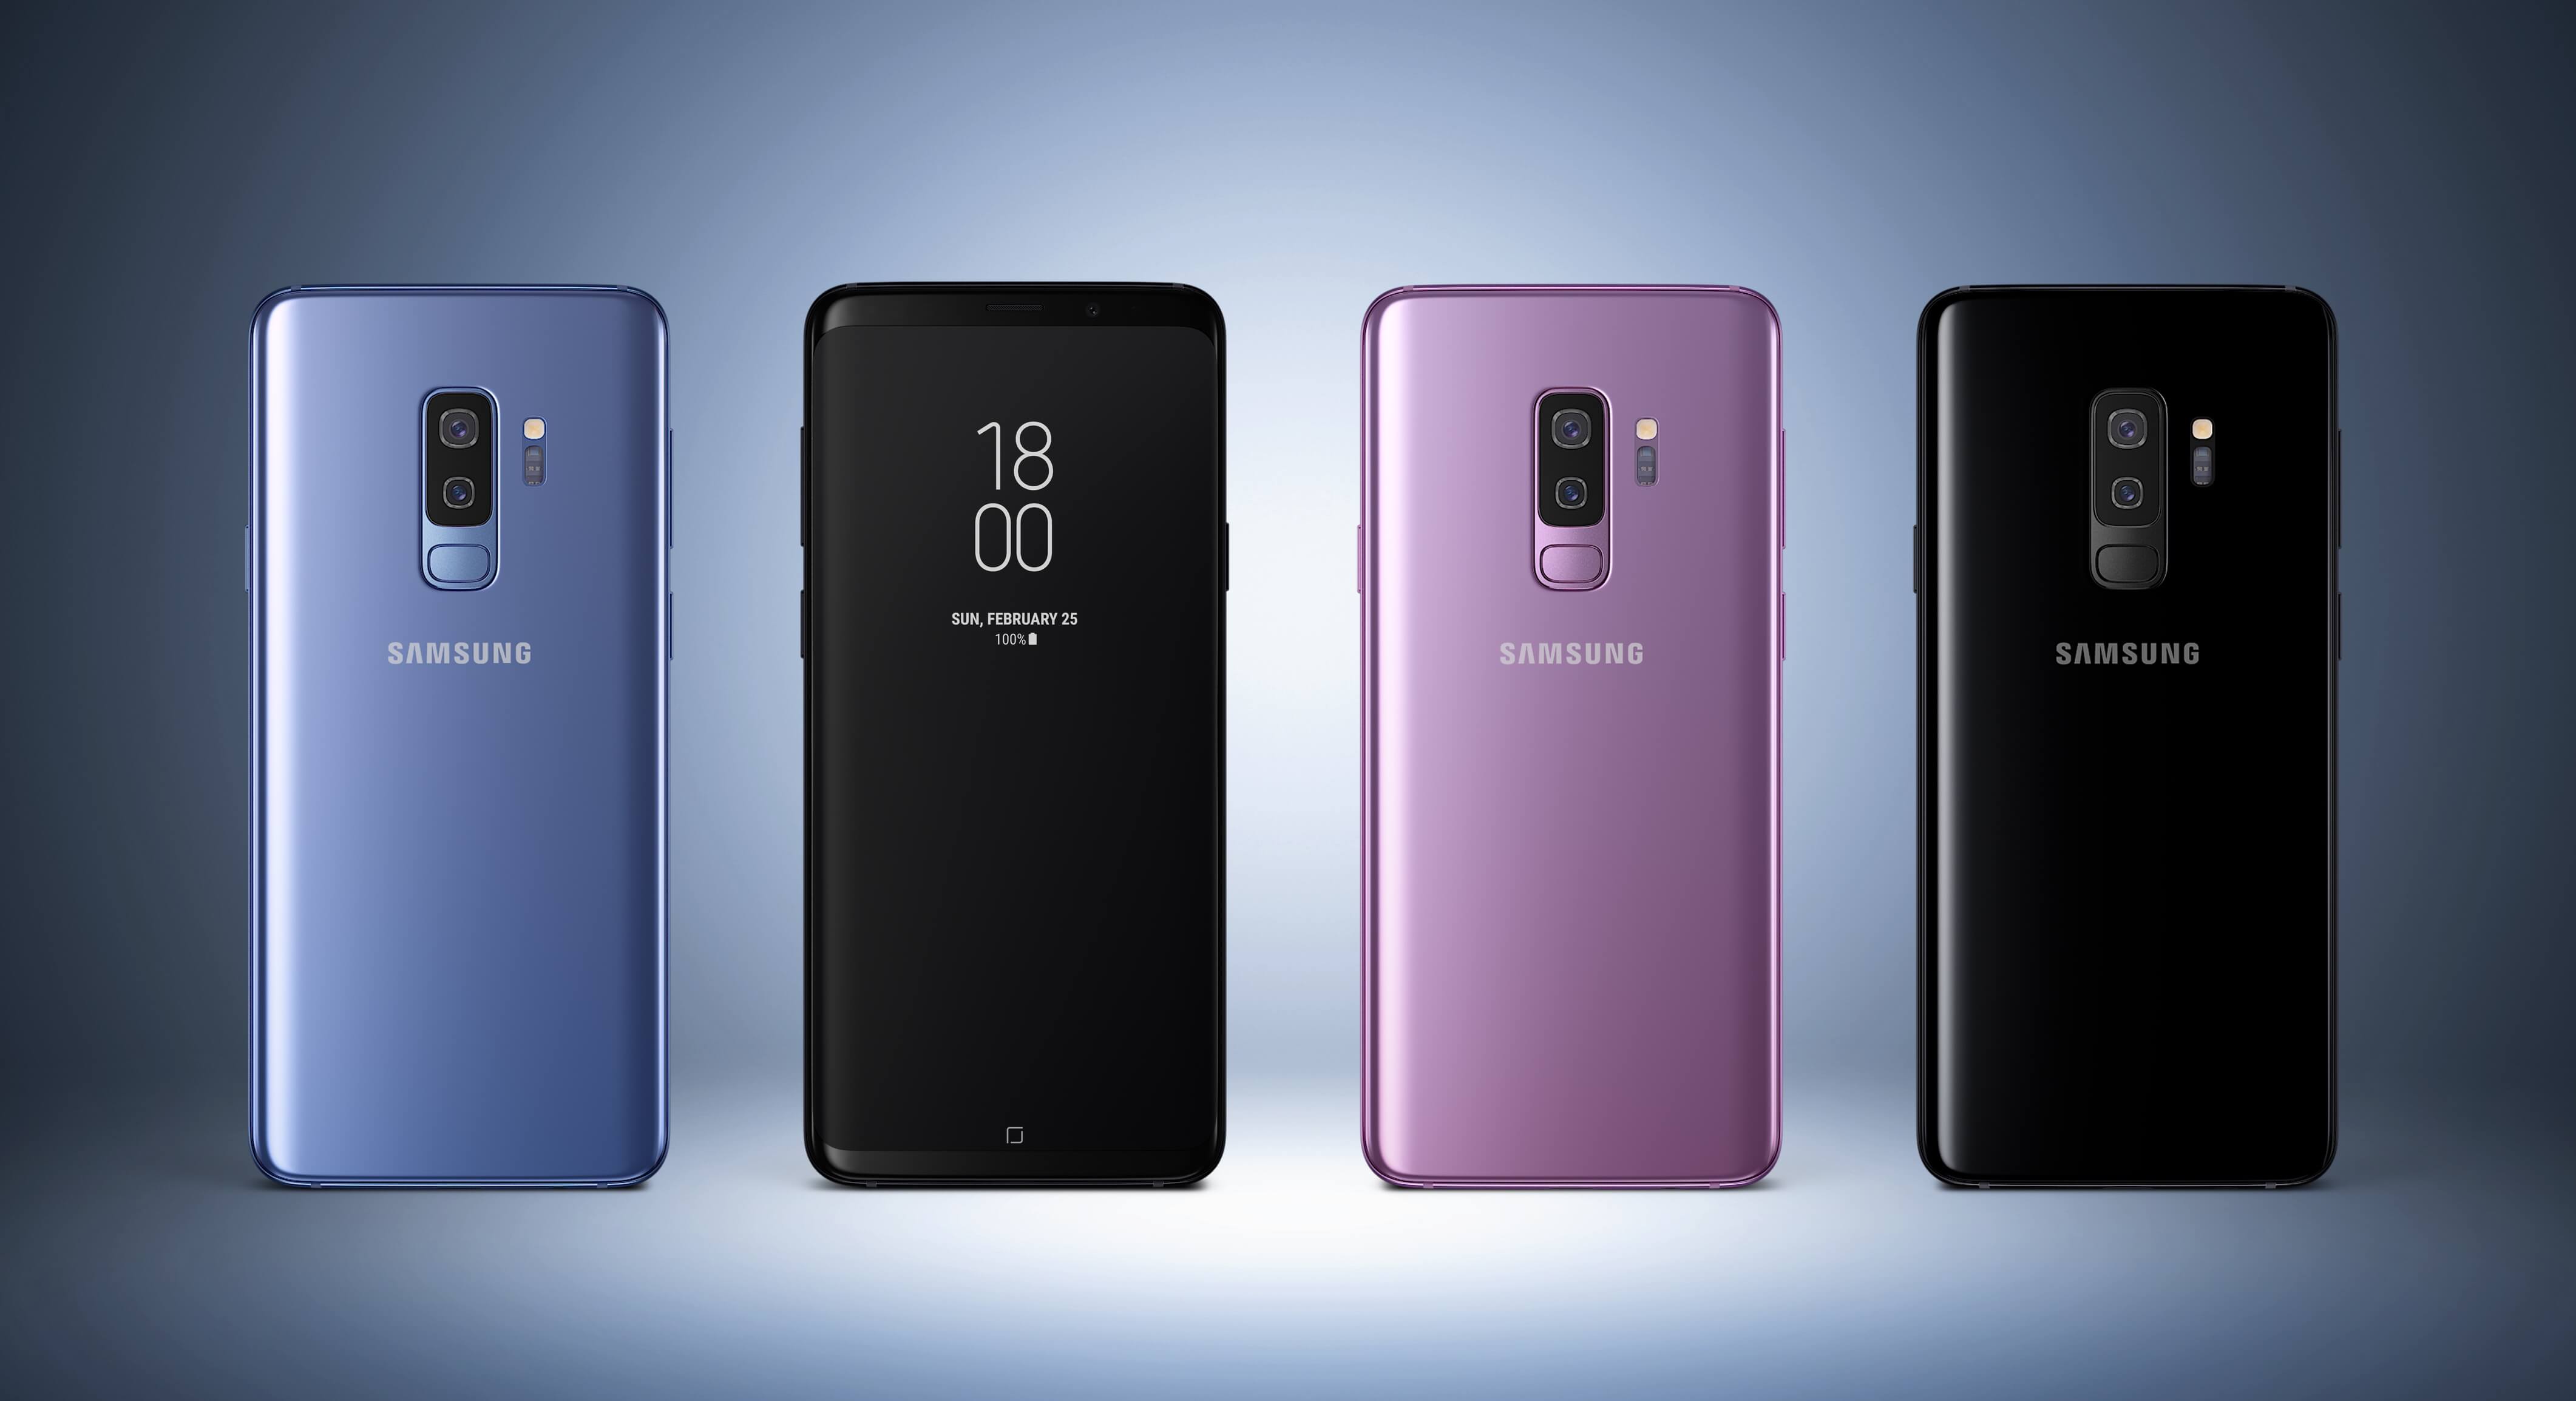 Samsung unveils its camera-focused Galaxy S9 handsets